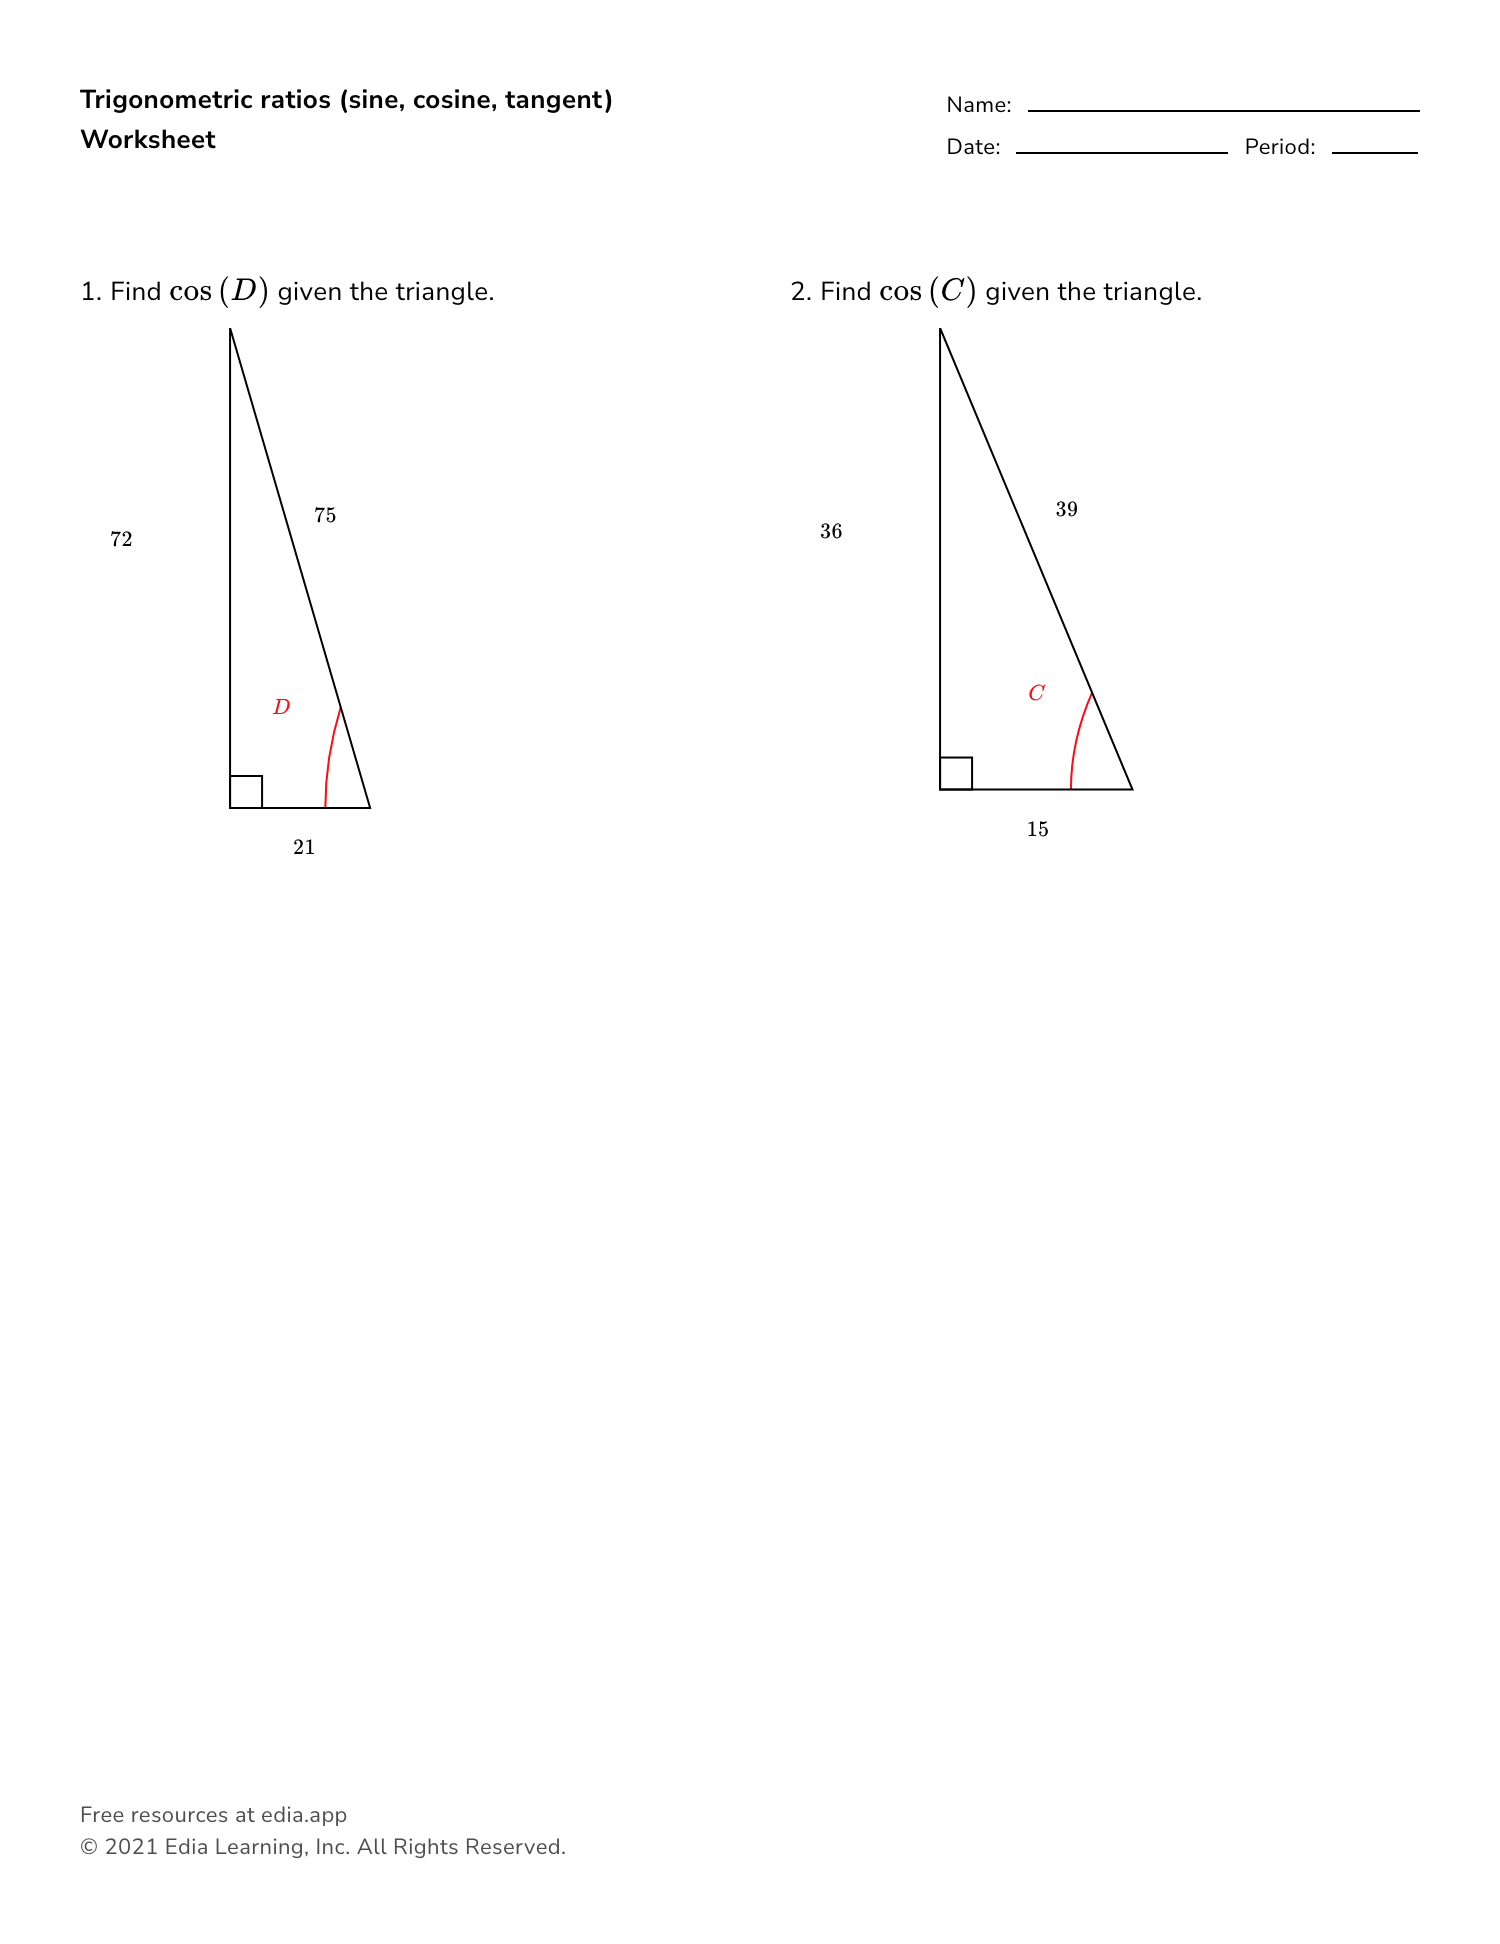 Trigonometric Ratios (sine, Cosine, Tangent) - Worksheet Within Right Triangle Trigonometry Worksheet